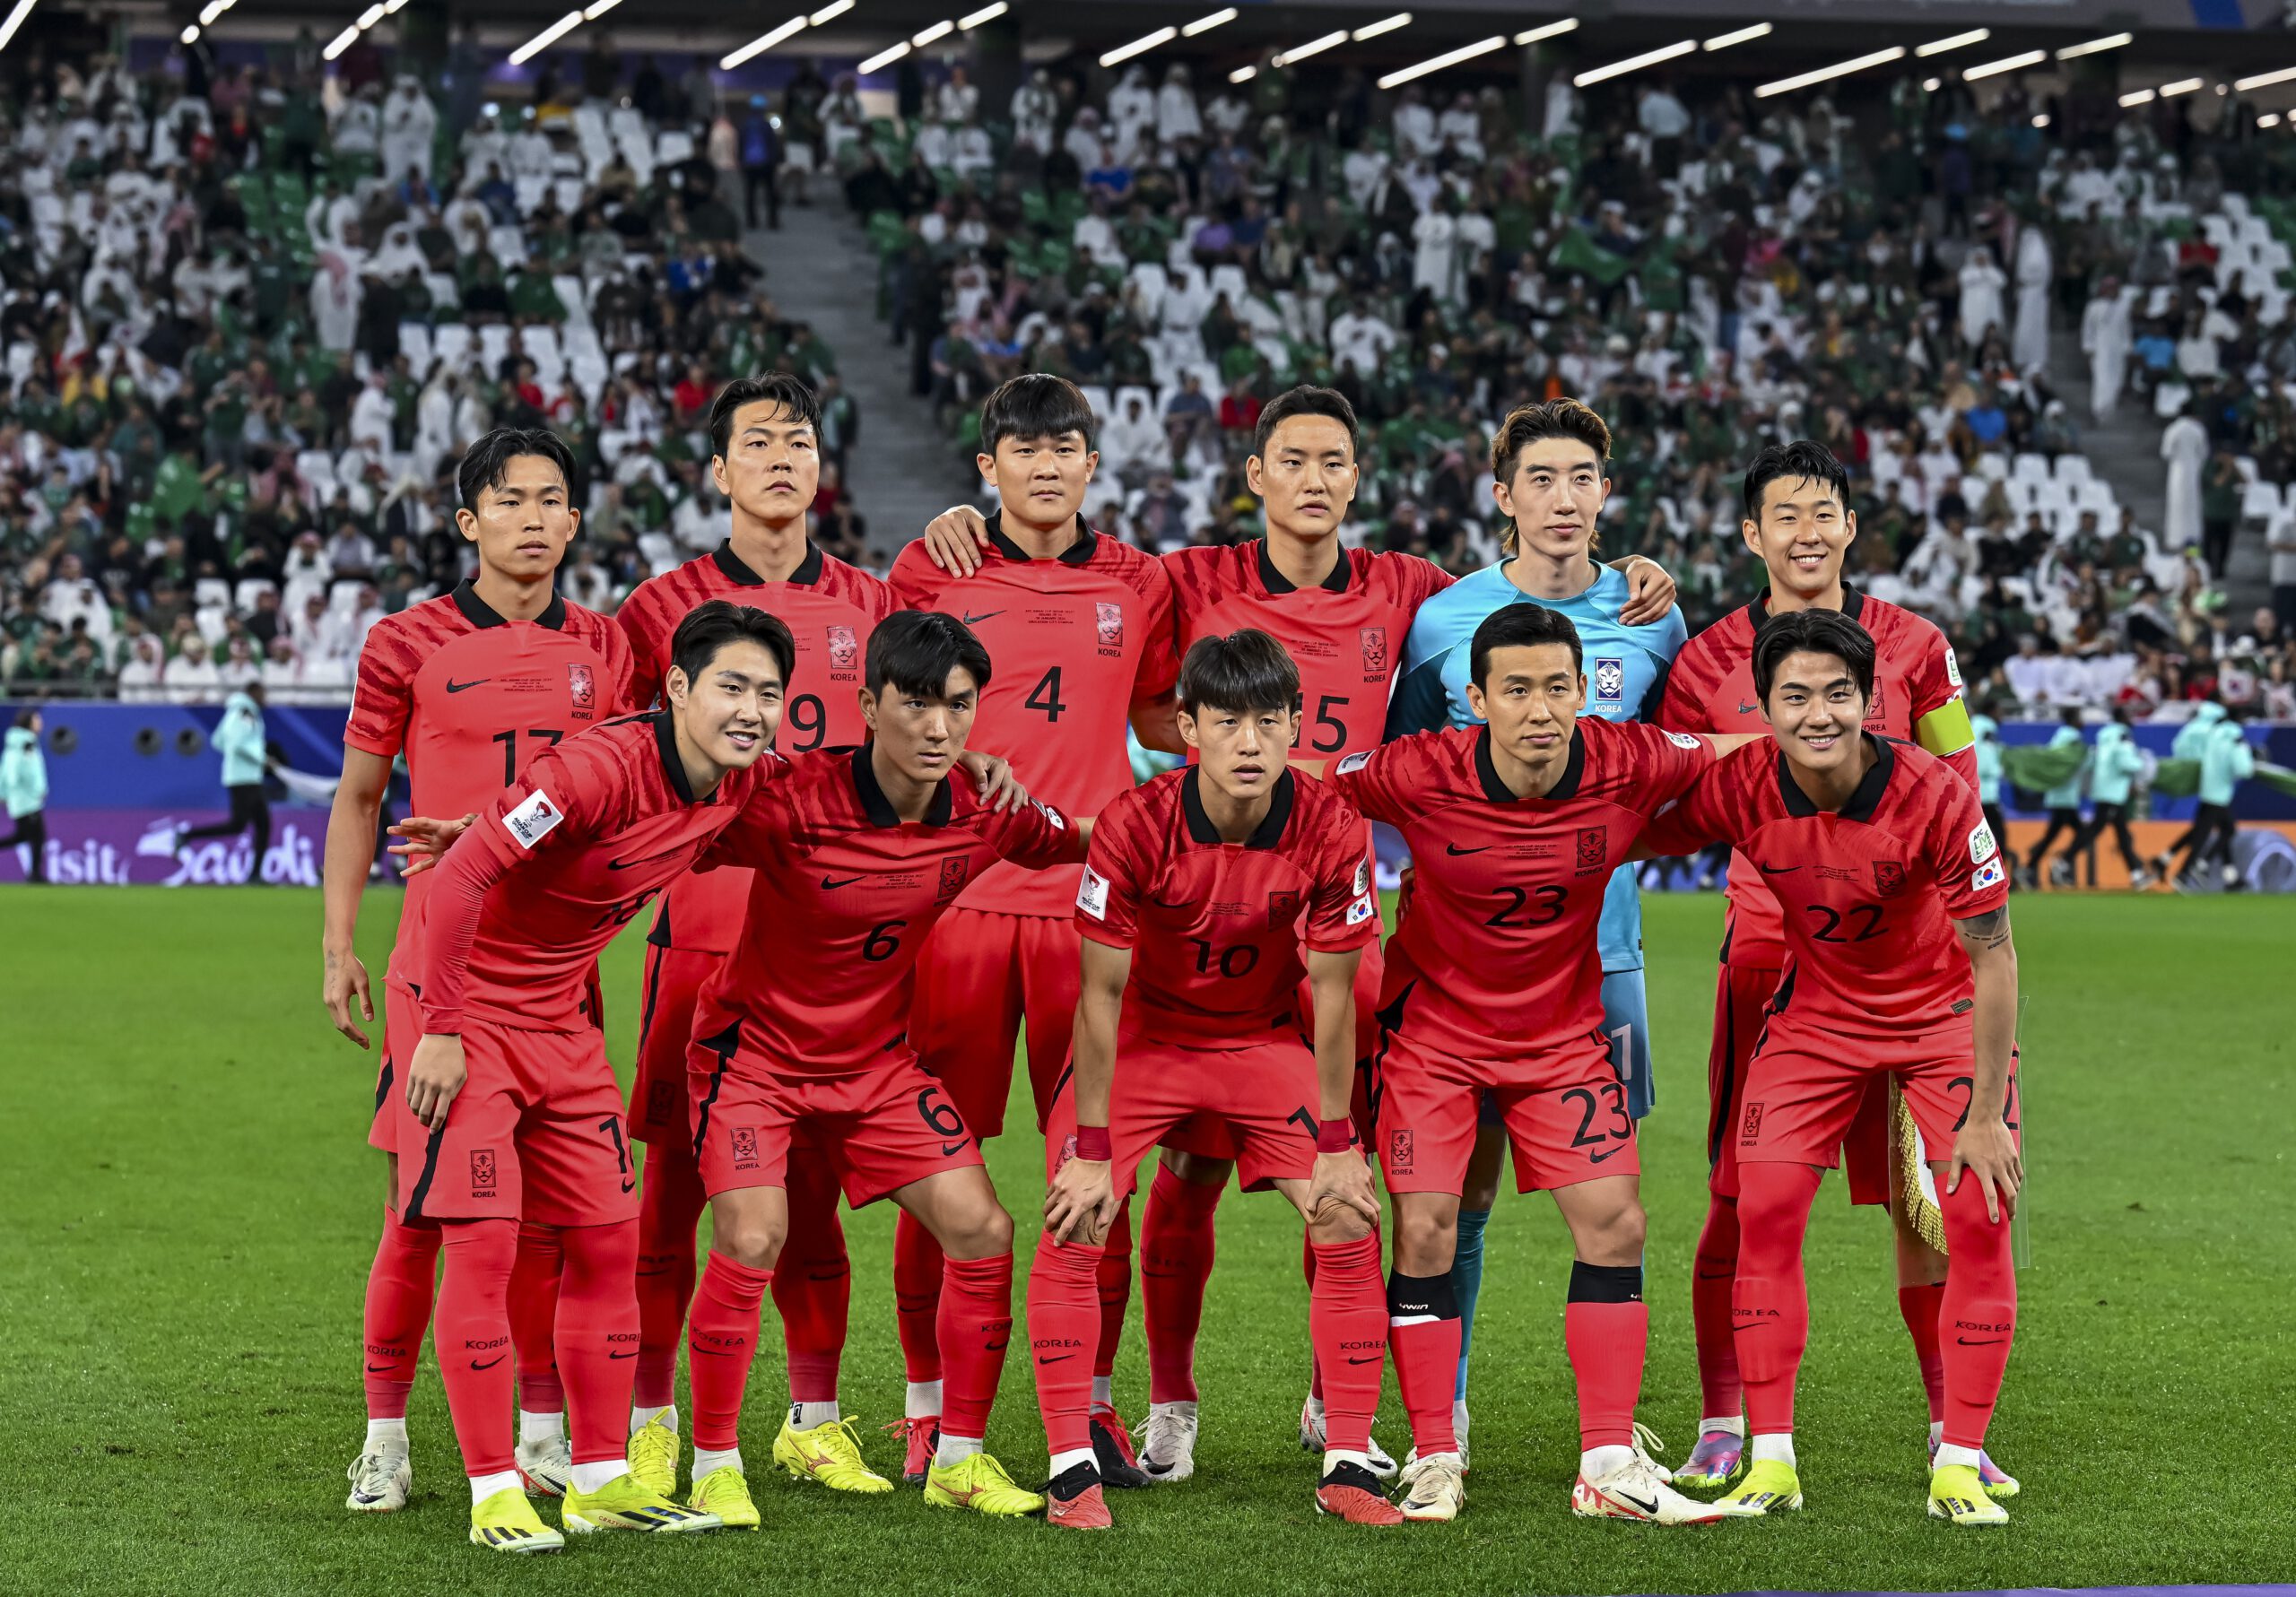 The South Korea national team players